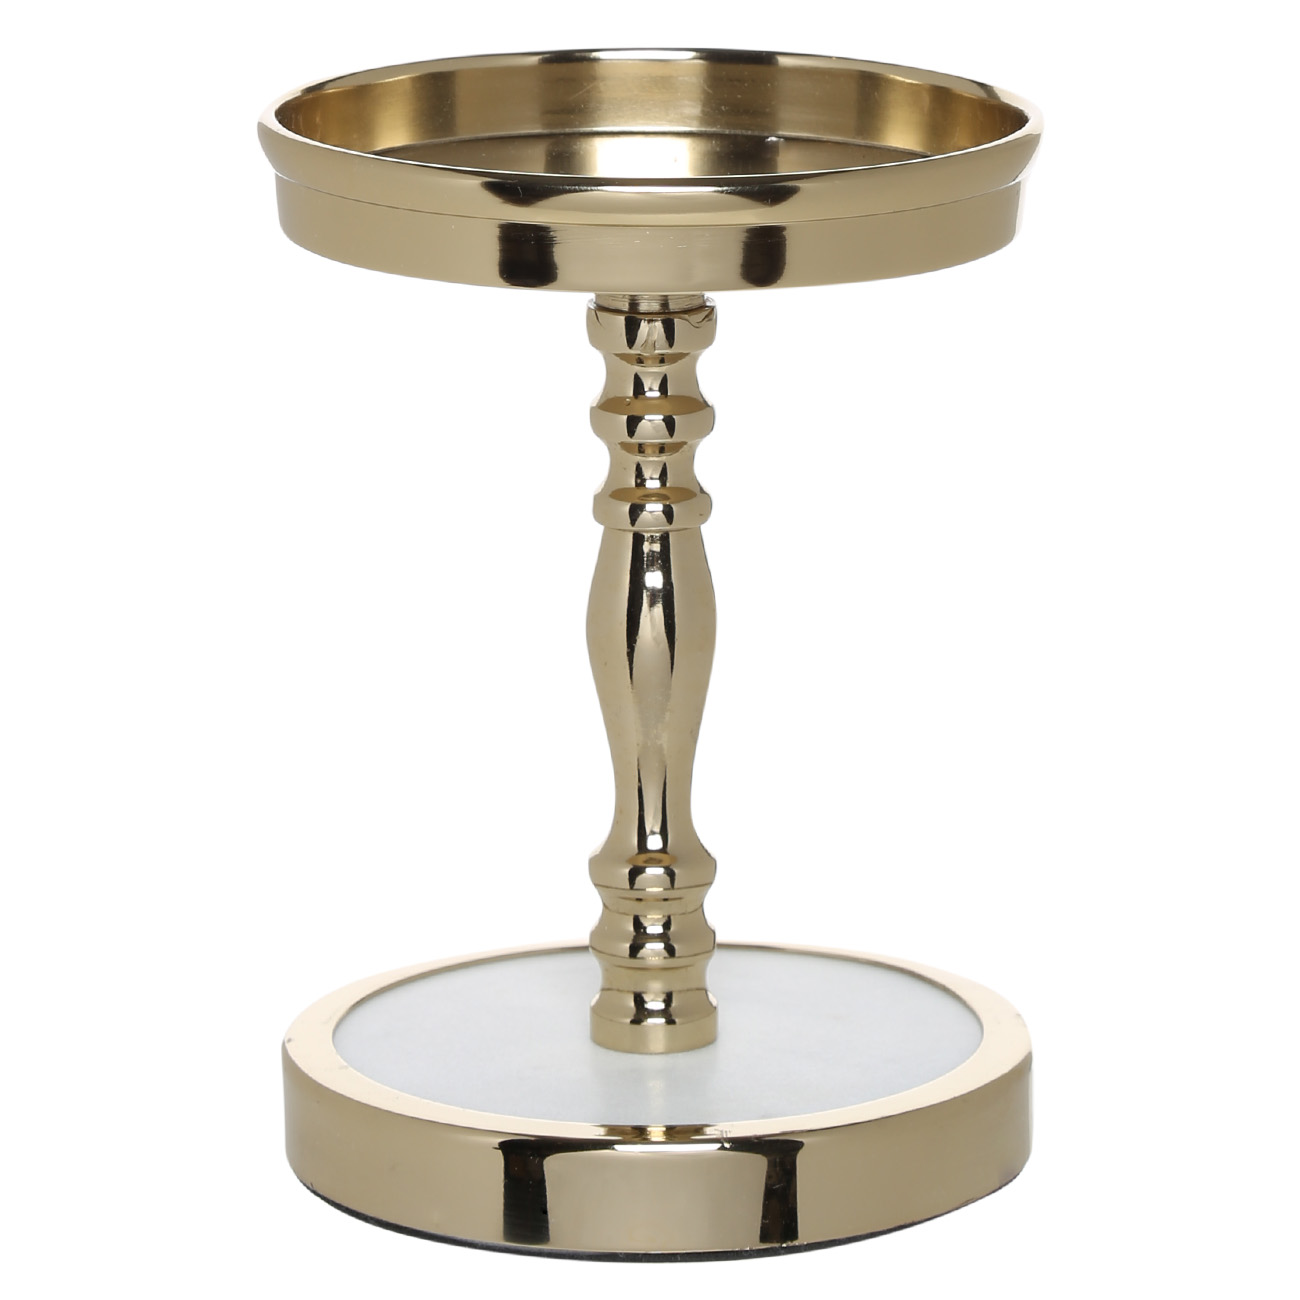 Candle holder, 30 cm, on a leg, metal / glass, golden, Craquelure, Fantastic gold изображение № 3